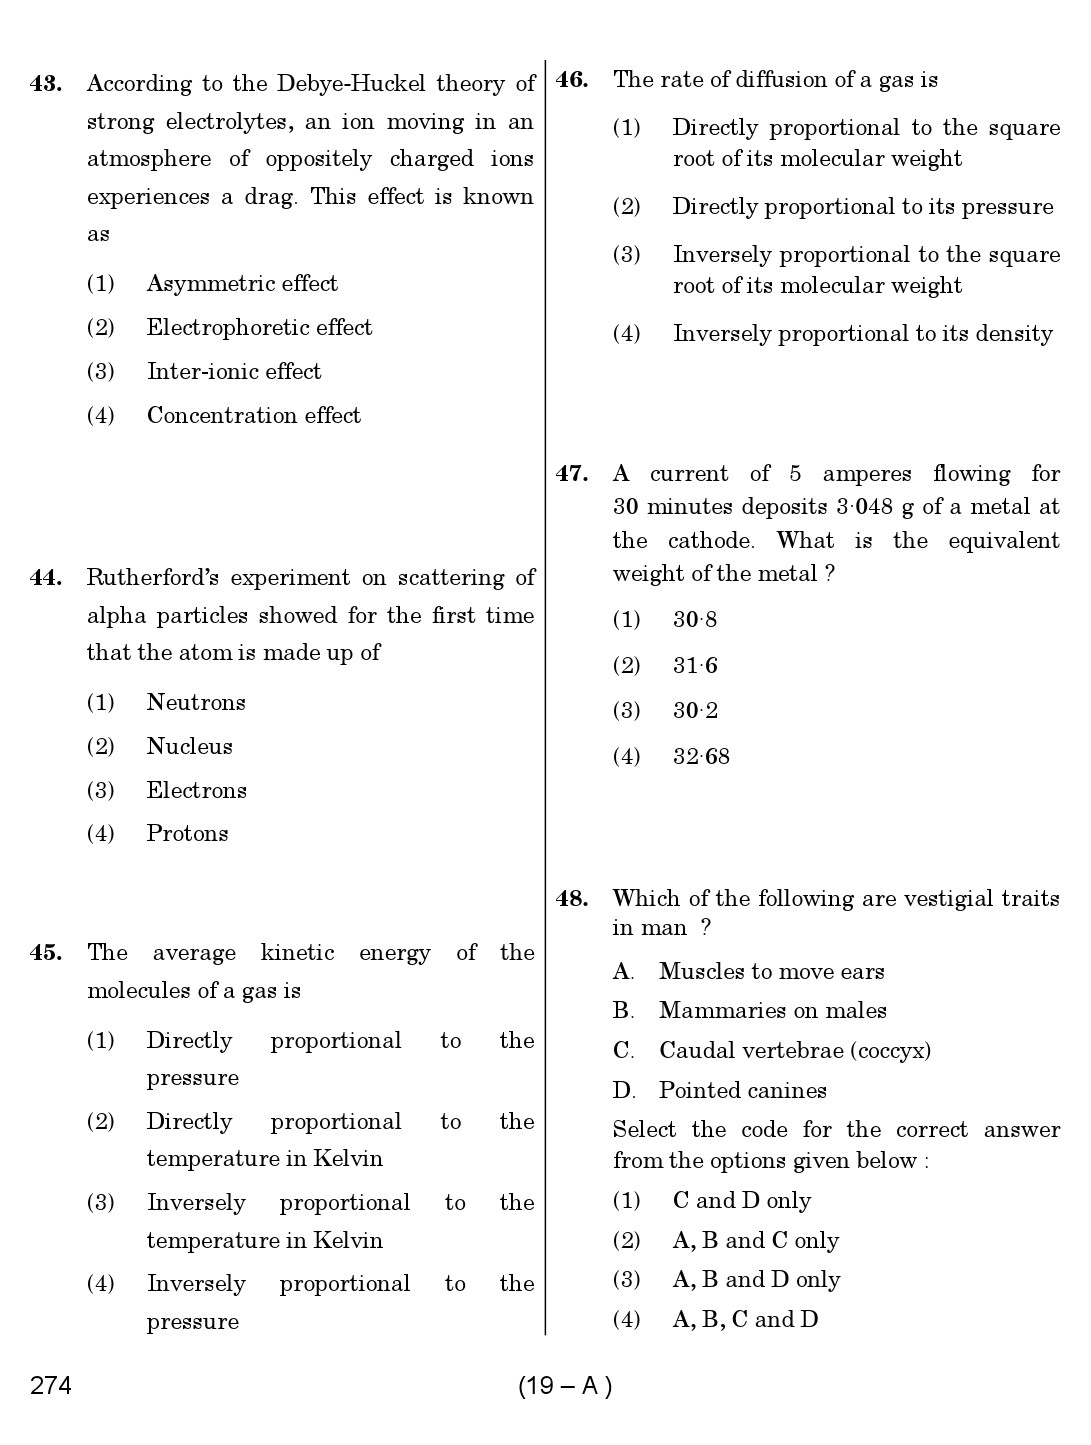 Karnataka PSC Science Teacher Exam Sample Question Paper Subject code 274 19